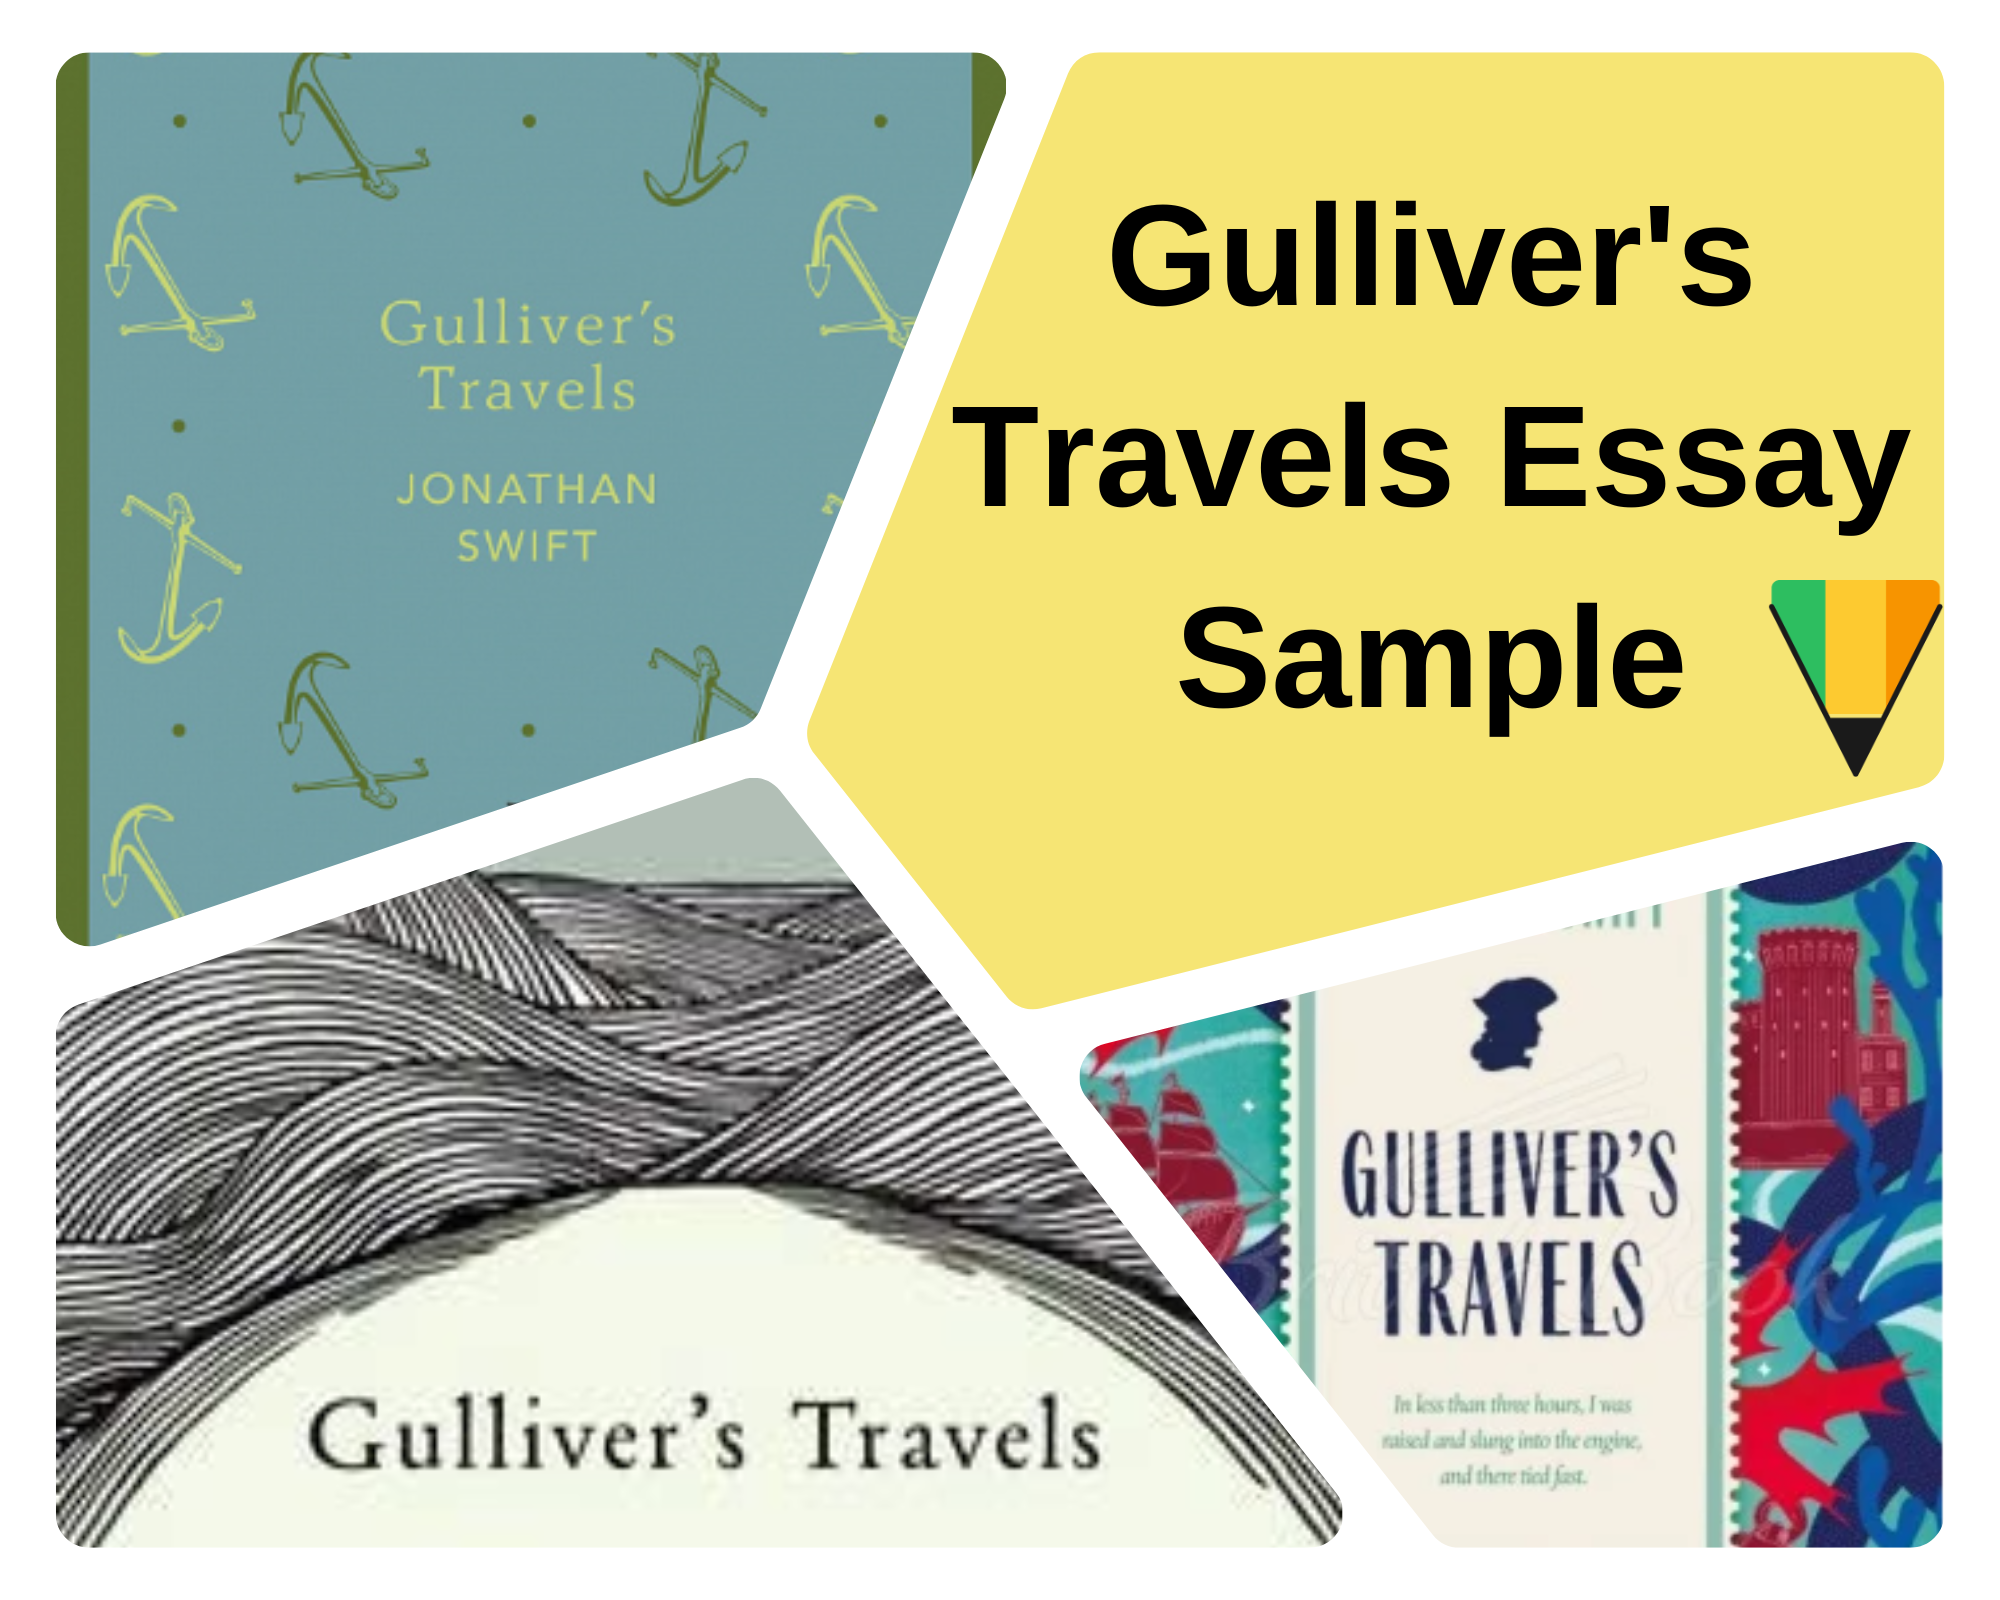 Gulliver's Travels Essay Sample